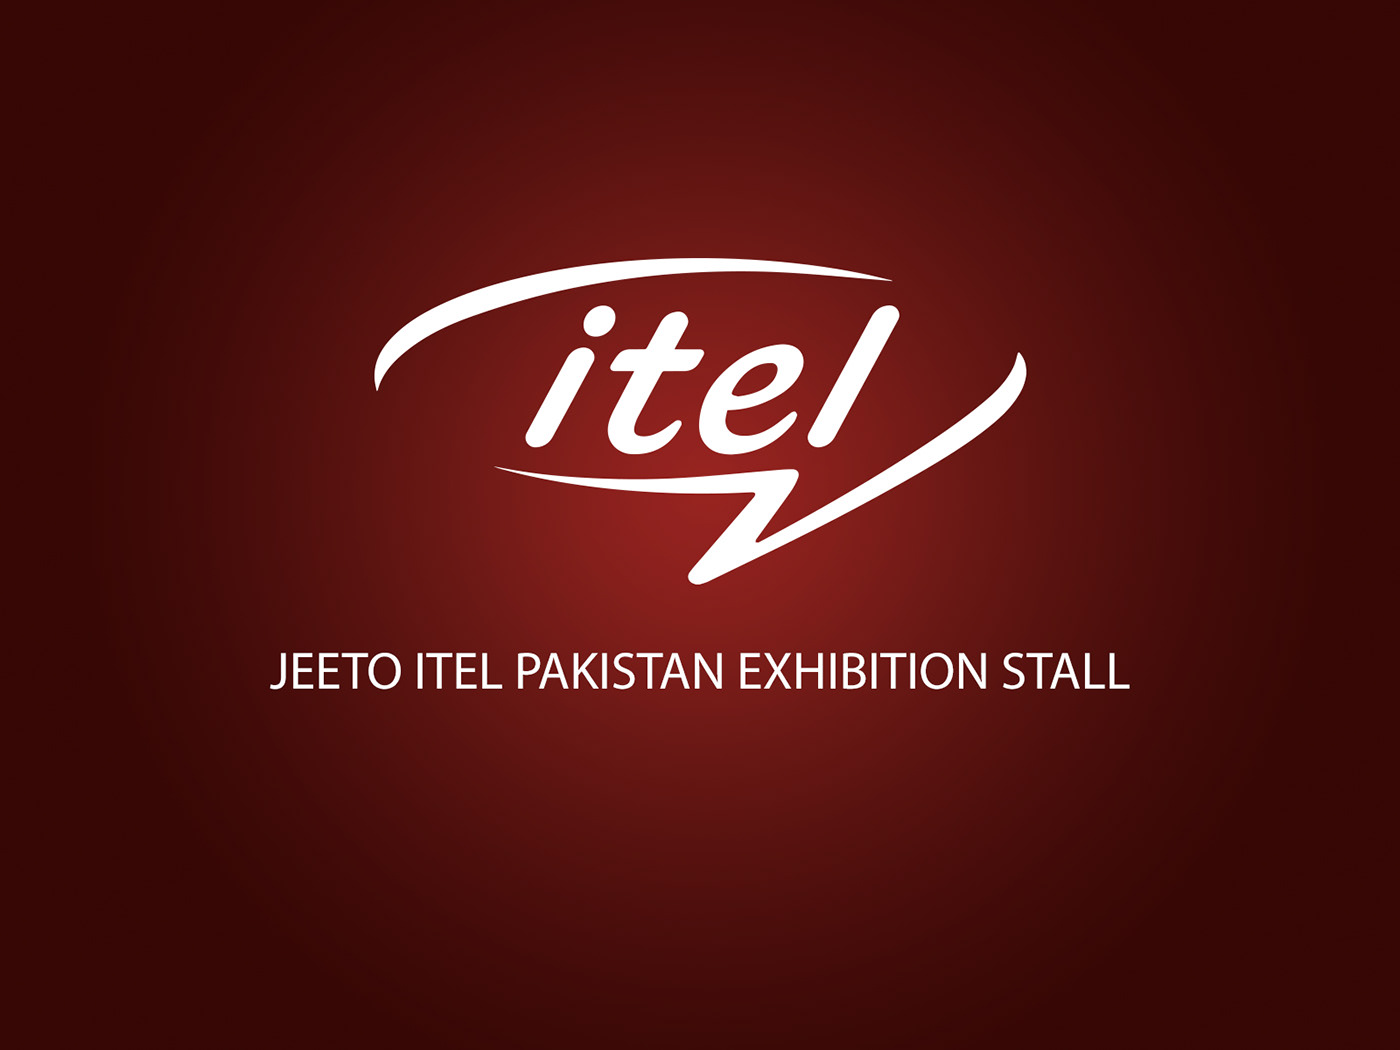 Display Exhibition  ITEL jeeto mobile Pakistan pop pos stall Stand